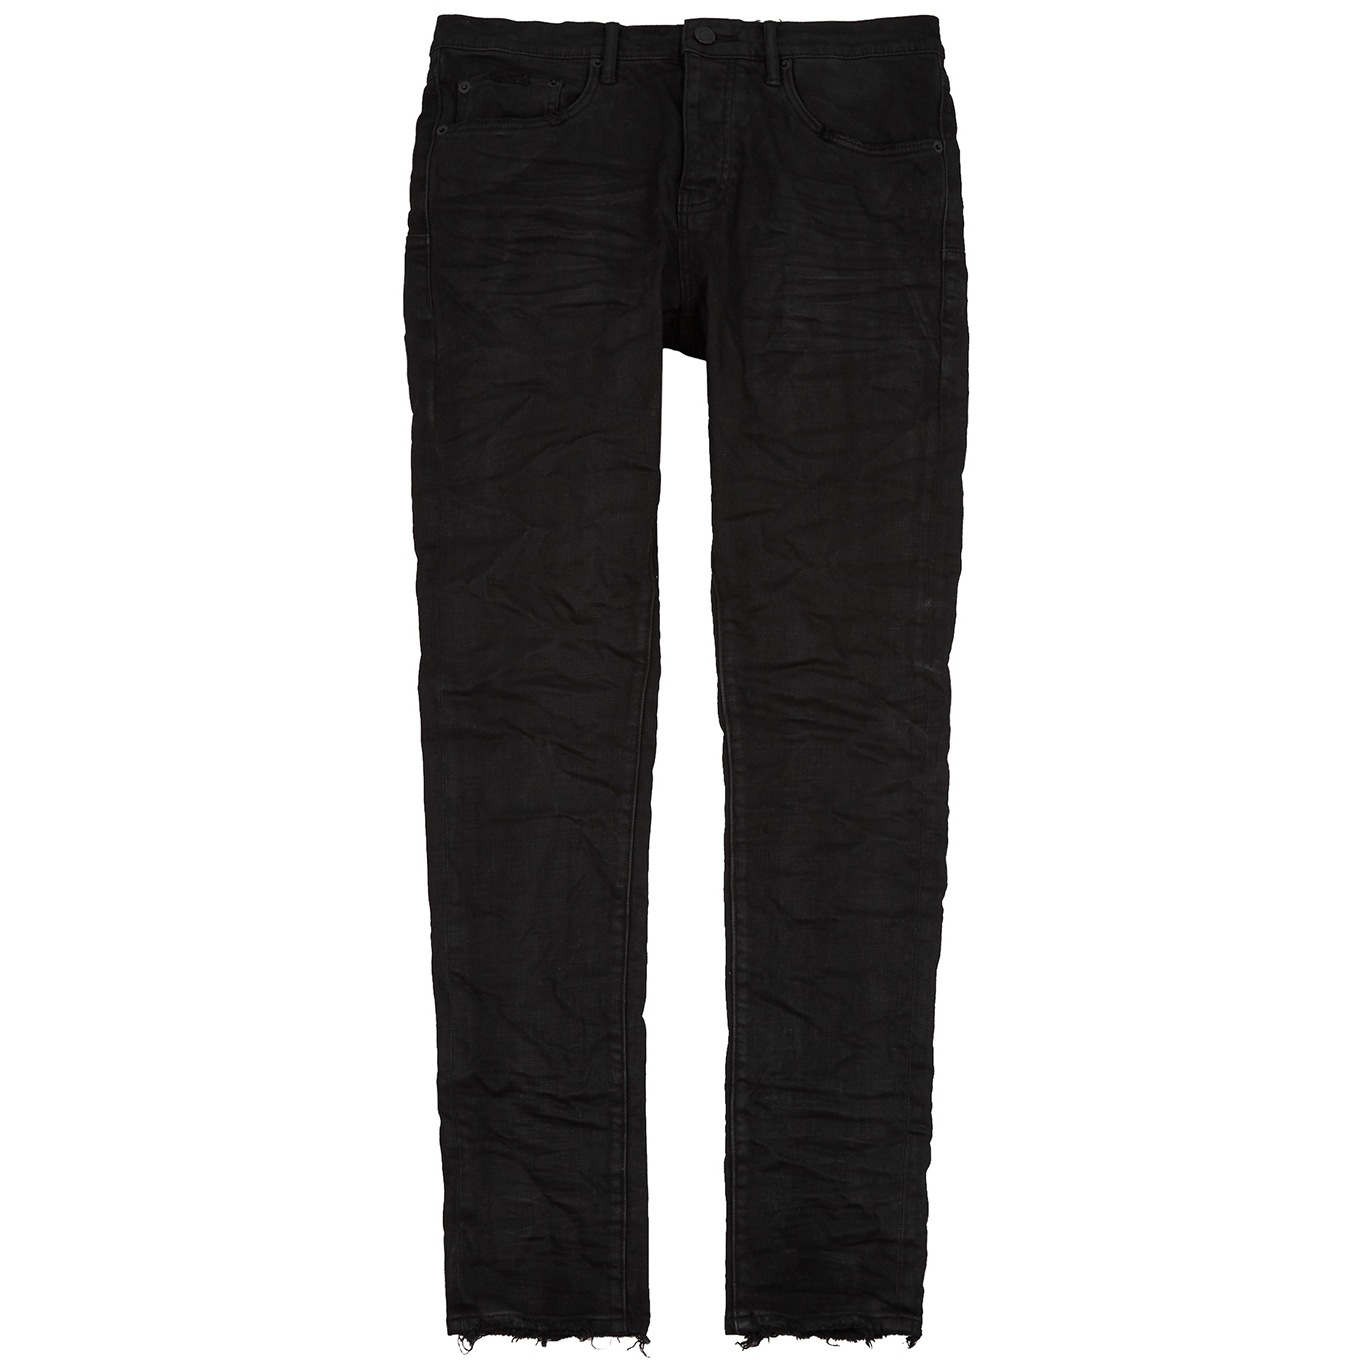 Purple Brand Black Distressed Coated Skinny Jeans - W34